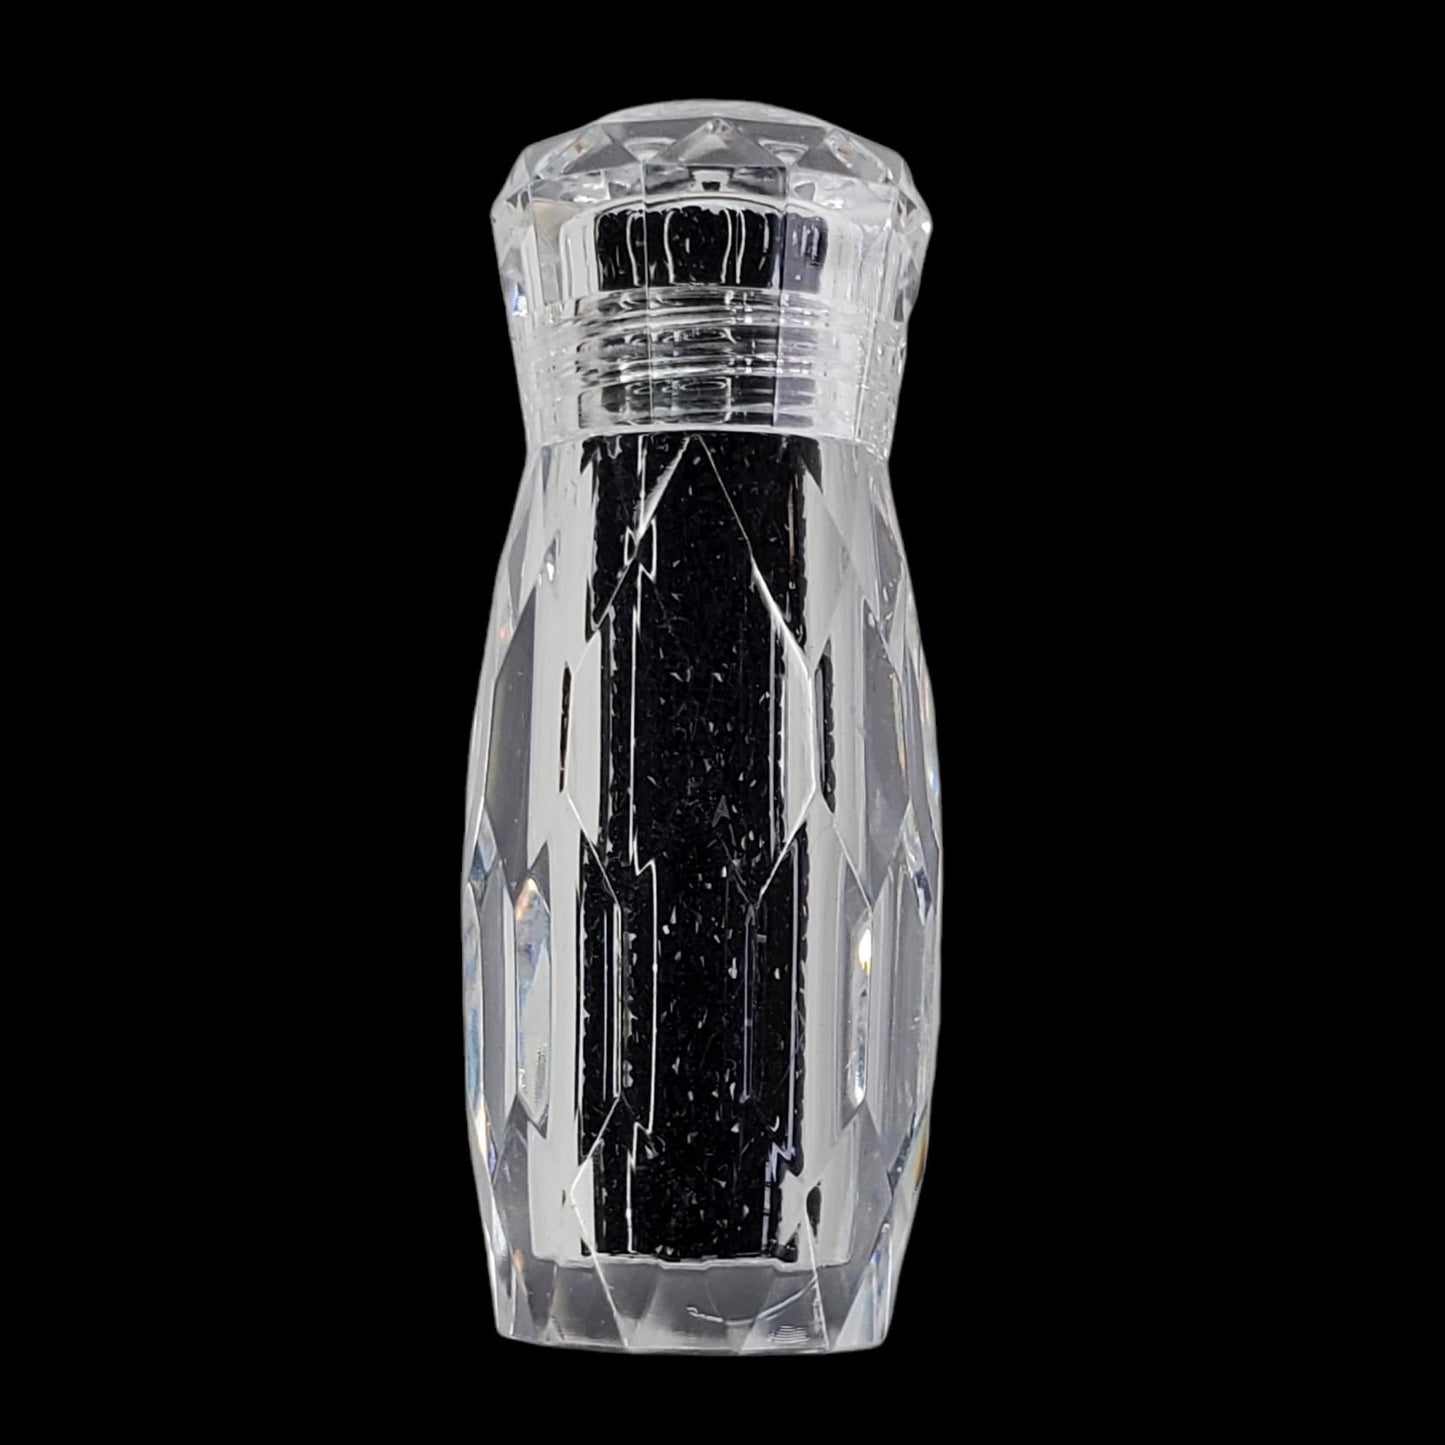 Jet Black Caviar Pixie Dust Micro Glass Rhinestones - Rhinestone Store – Be  Createful